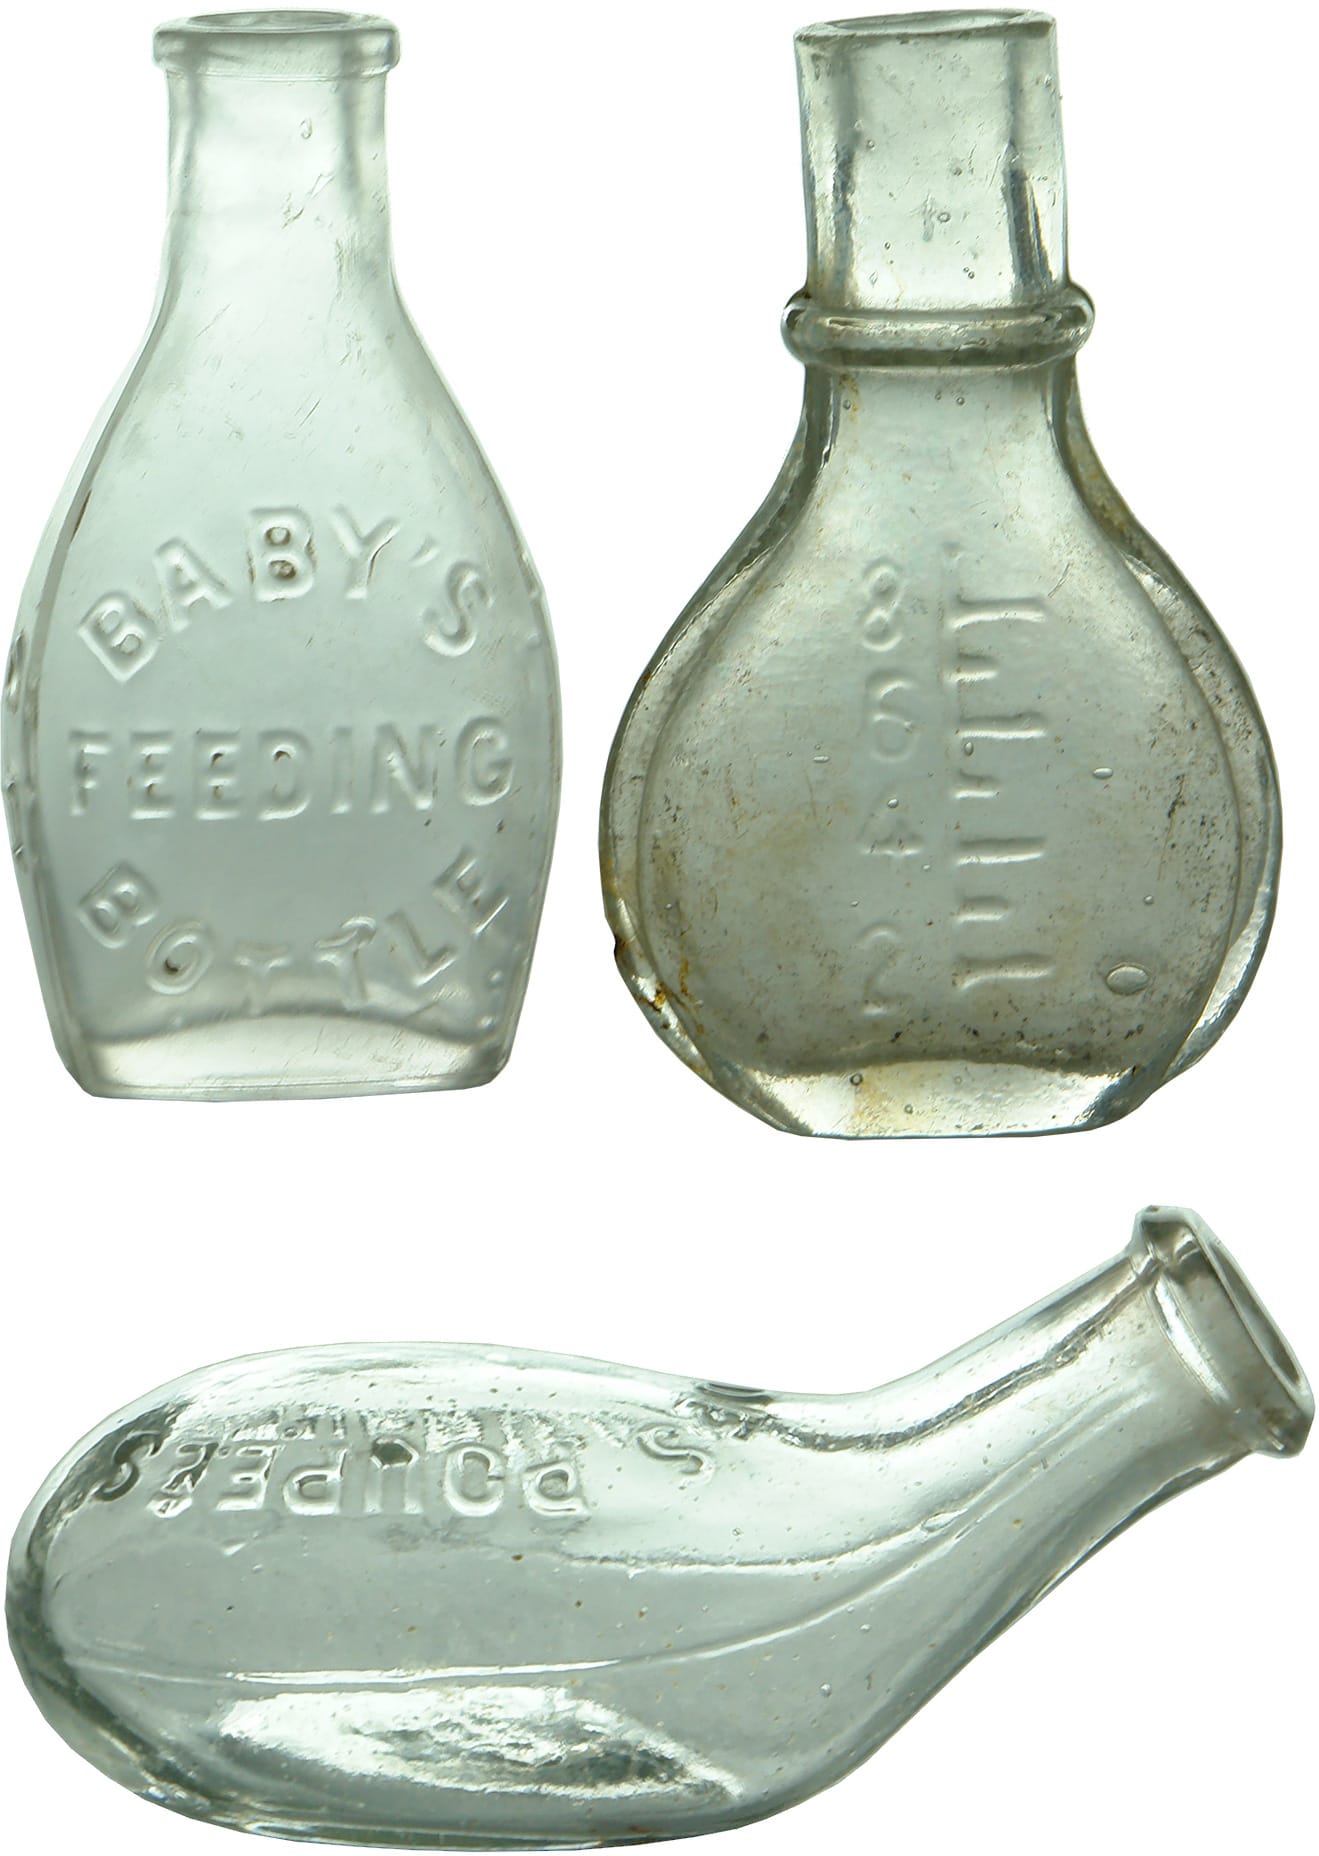 Sample Miniature Baby Feeding Bottles